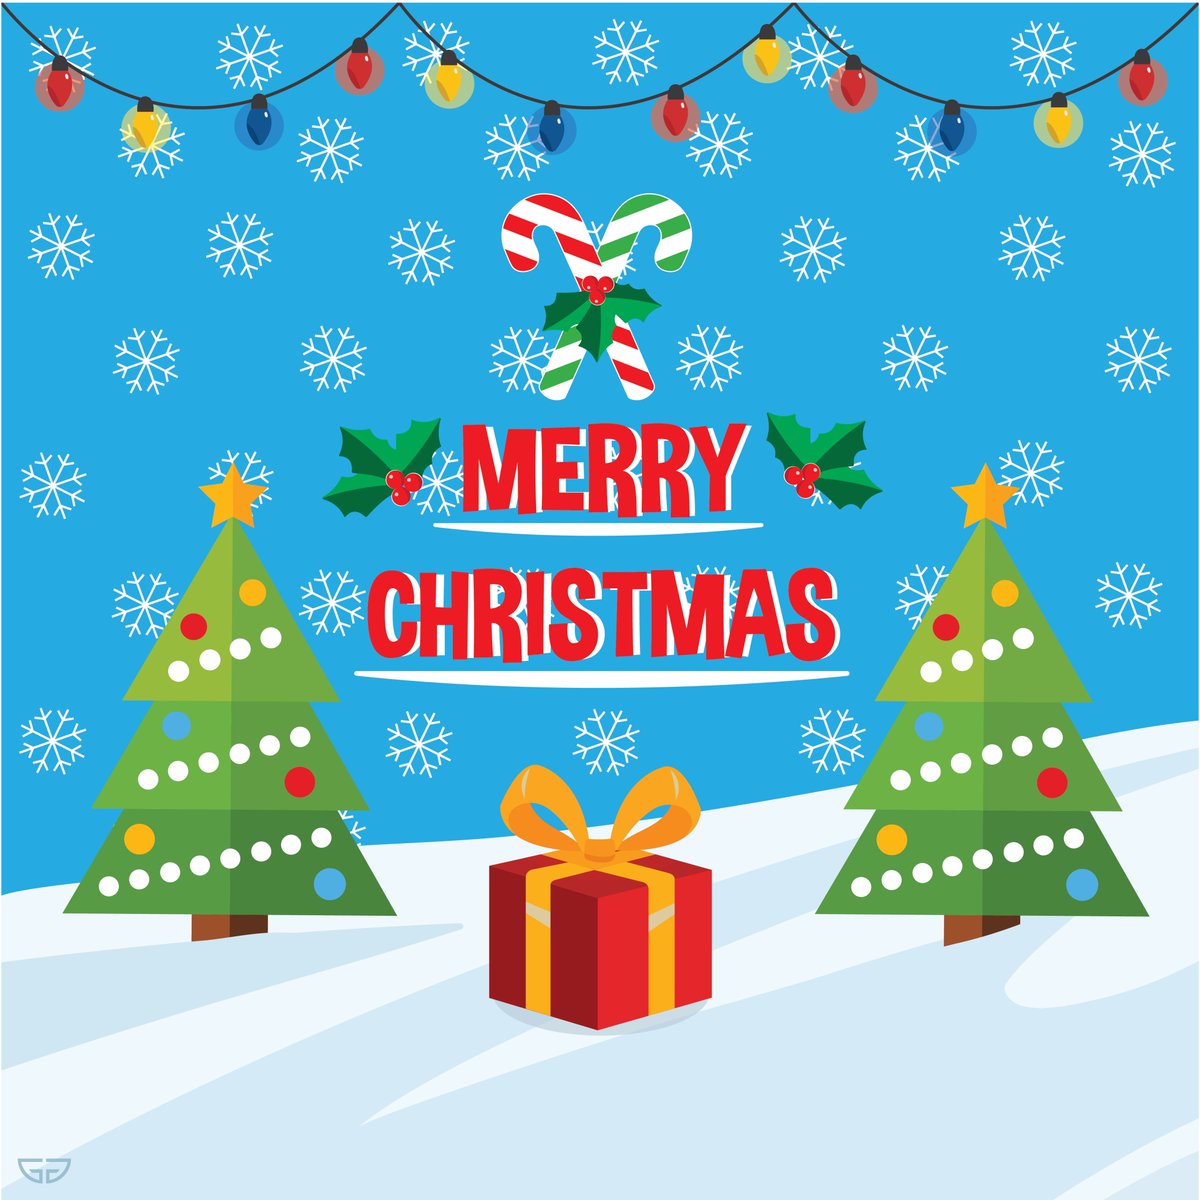 Merry Christmas! 🎄🎅🏼
(Made with Adobe Illustrator)
• • •
#christmas #merrychristmas #christmasgraphics #christmasdesign #graphicdesign #design #graphic #graphicdesigner #creative #illustrator #brand #photoshop #digitalart #adobe @adobe @photoshop